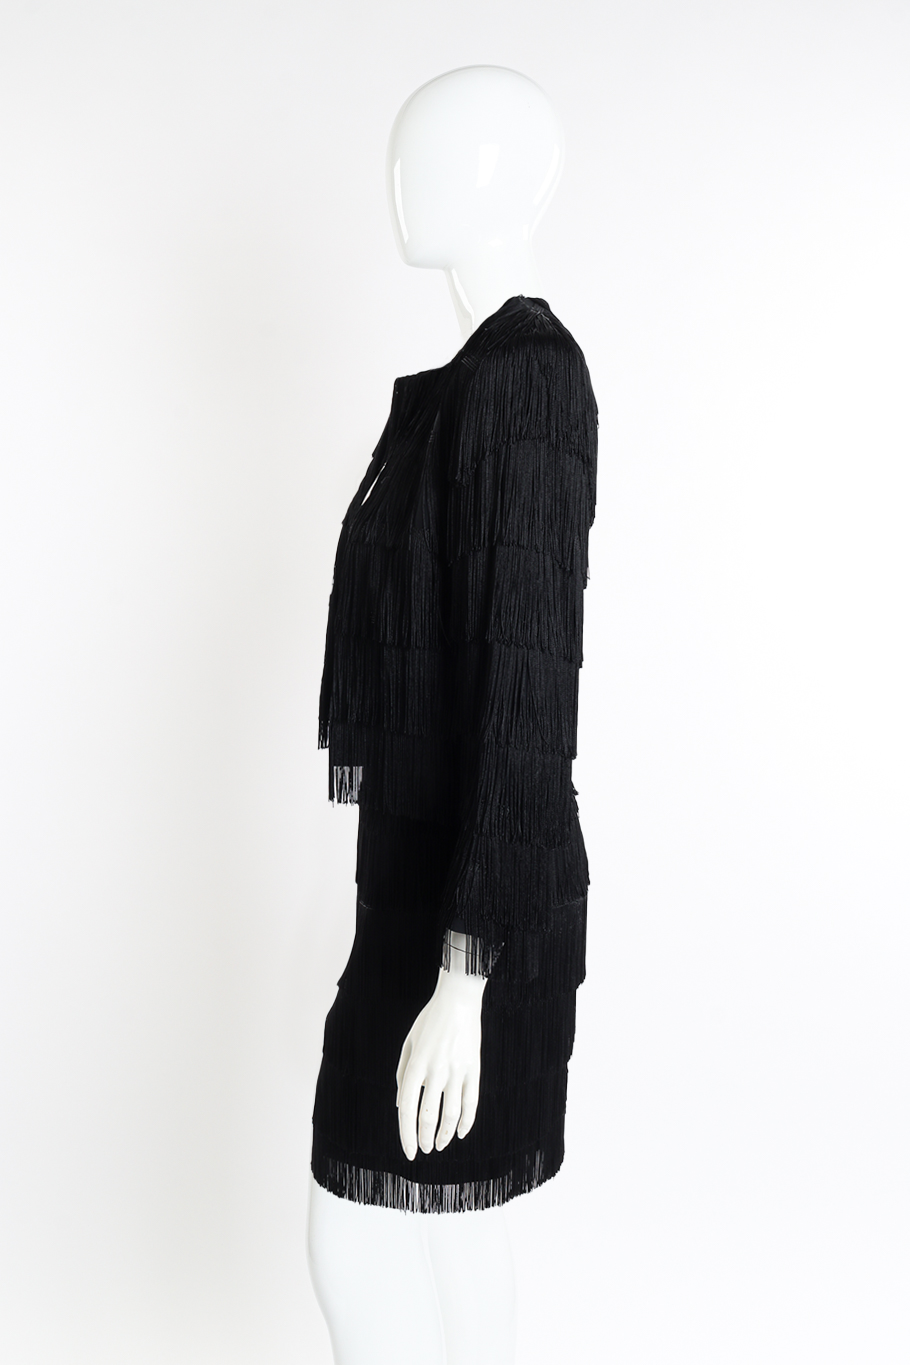 Vintage Moschino Couture Fringe Jacket and Skirt Set side on mannequin @recessla